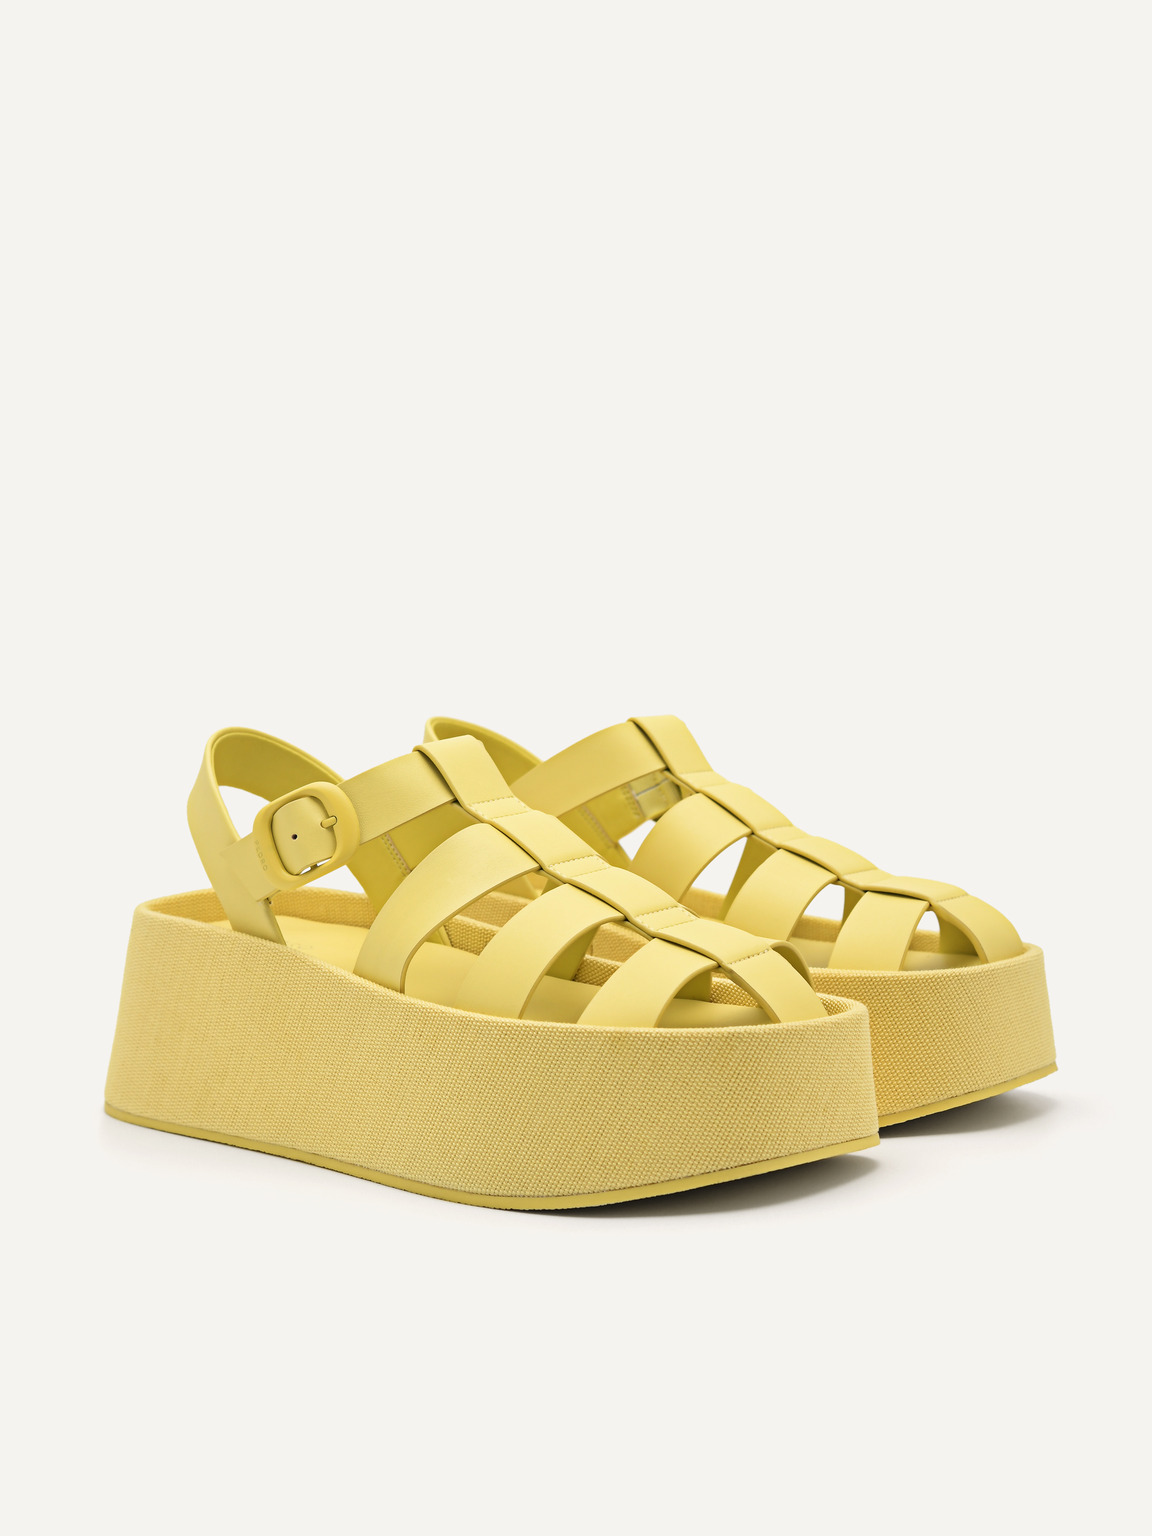 Palma Platform Sandals, Yellow